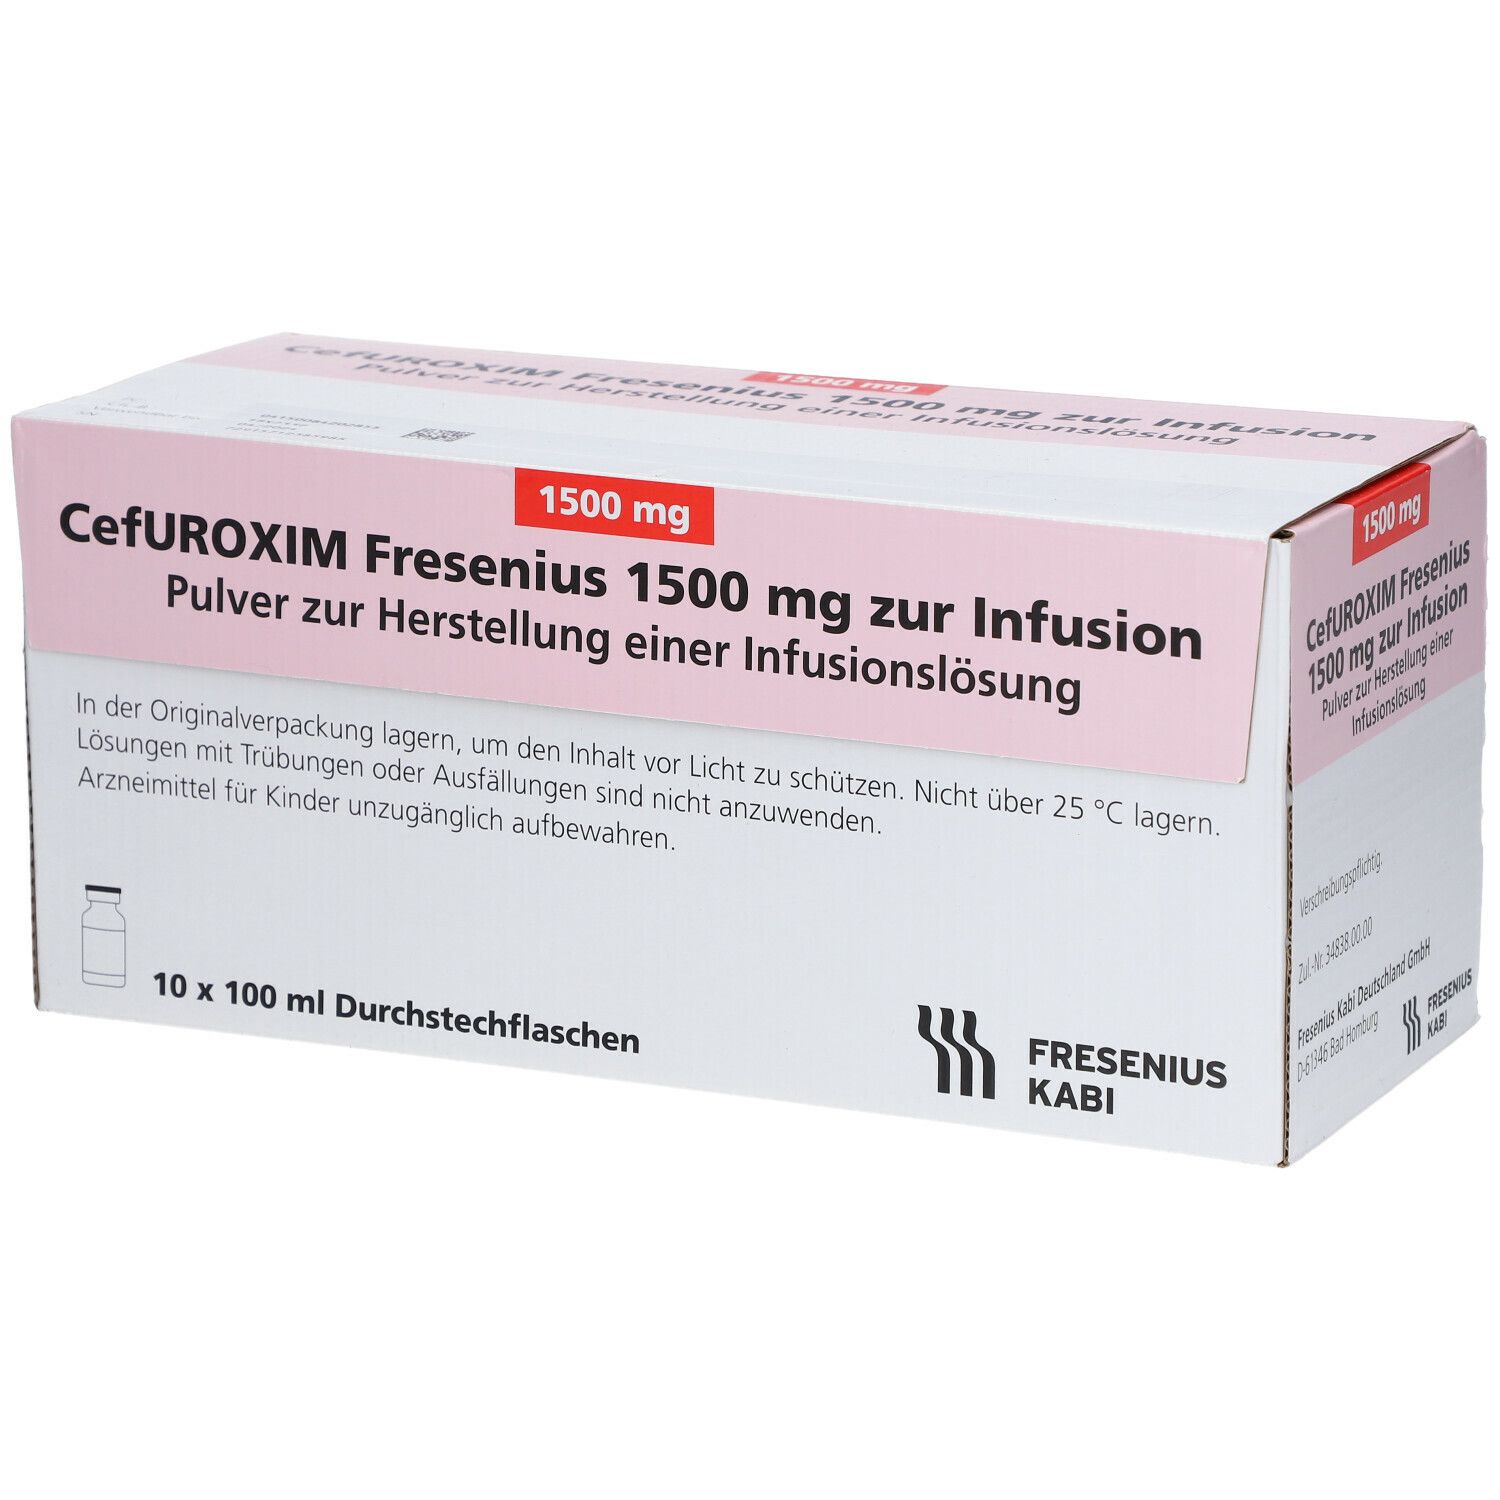 CefUROXIM Fresenius 1500 mg